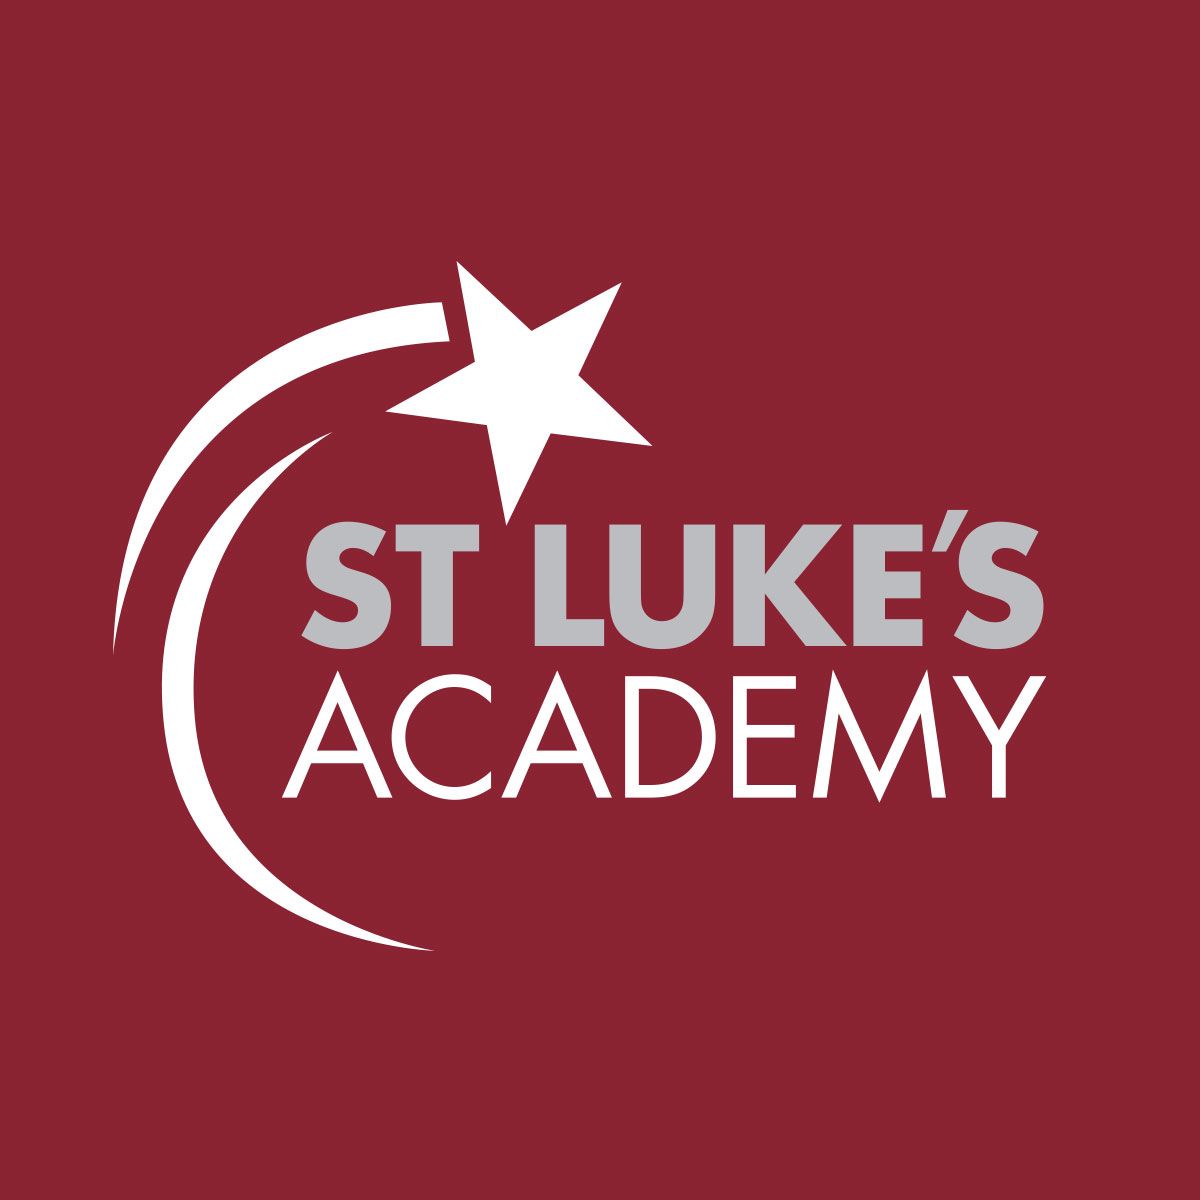 St Luke's Academy logo